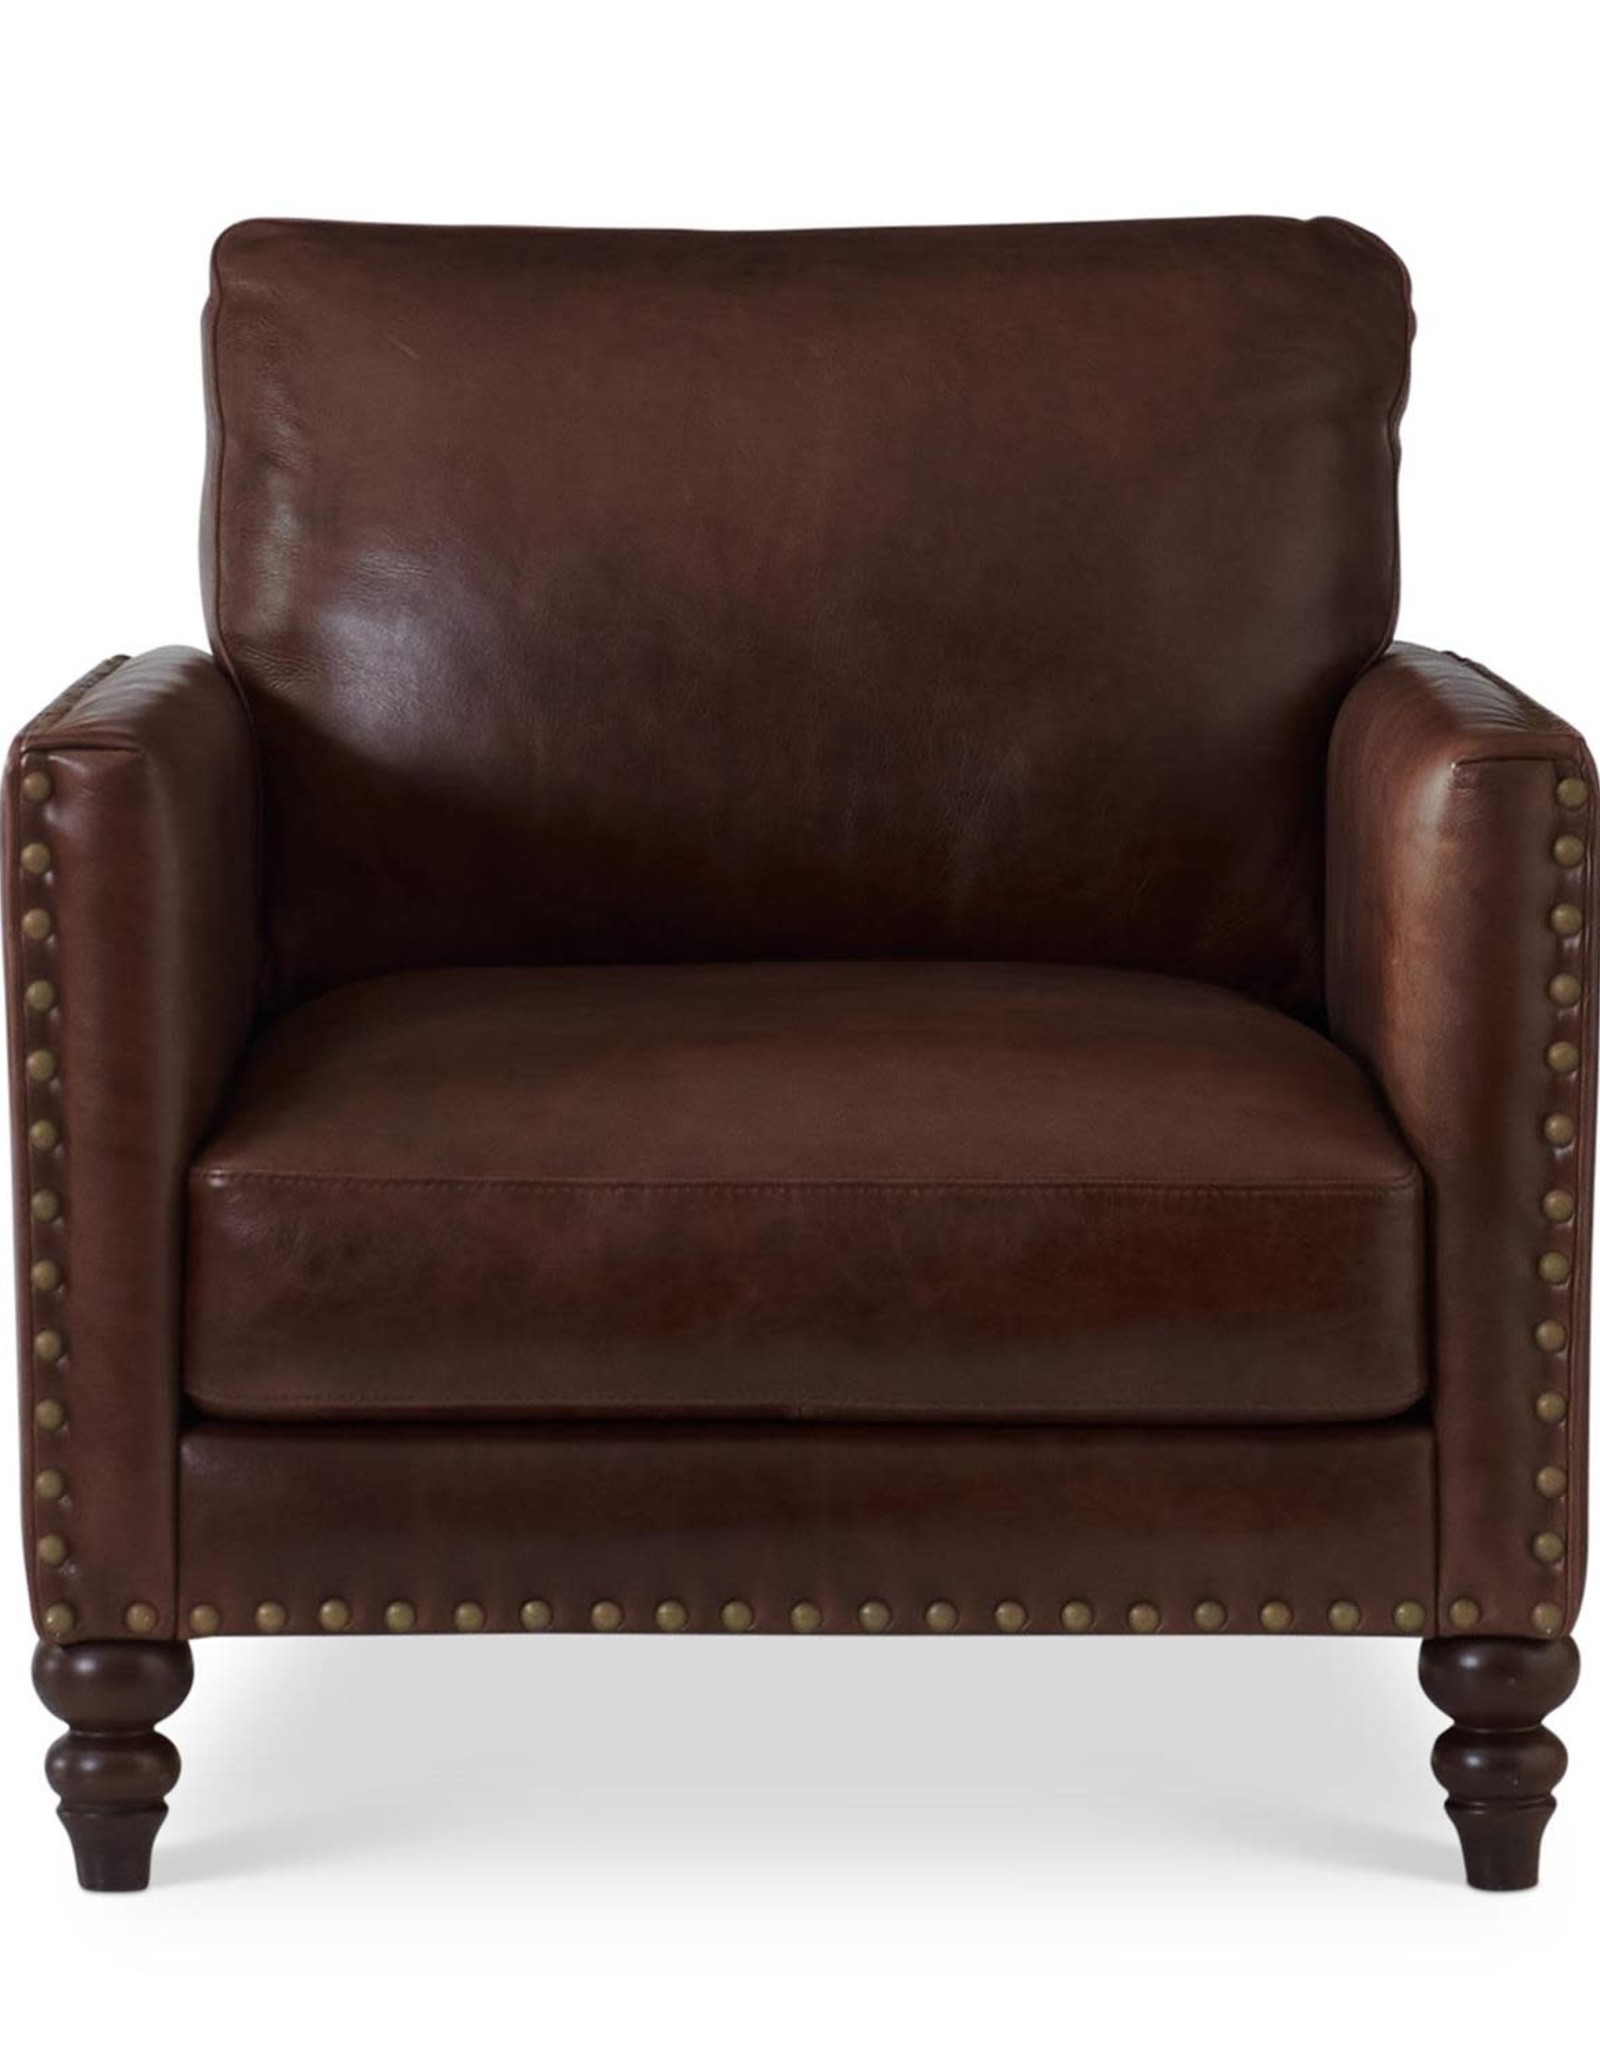 Chestnut Brown Italian Leather Chair w/ Nailhead Trim